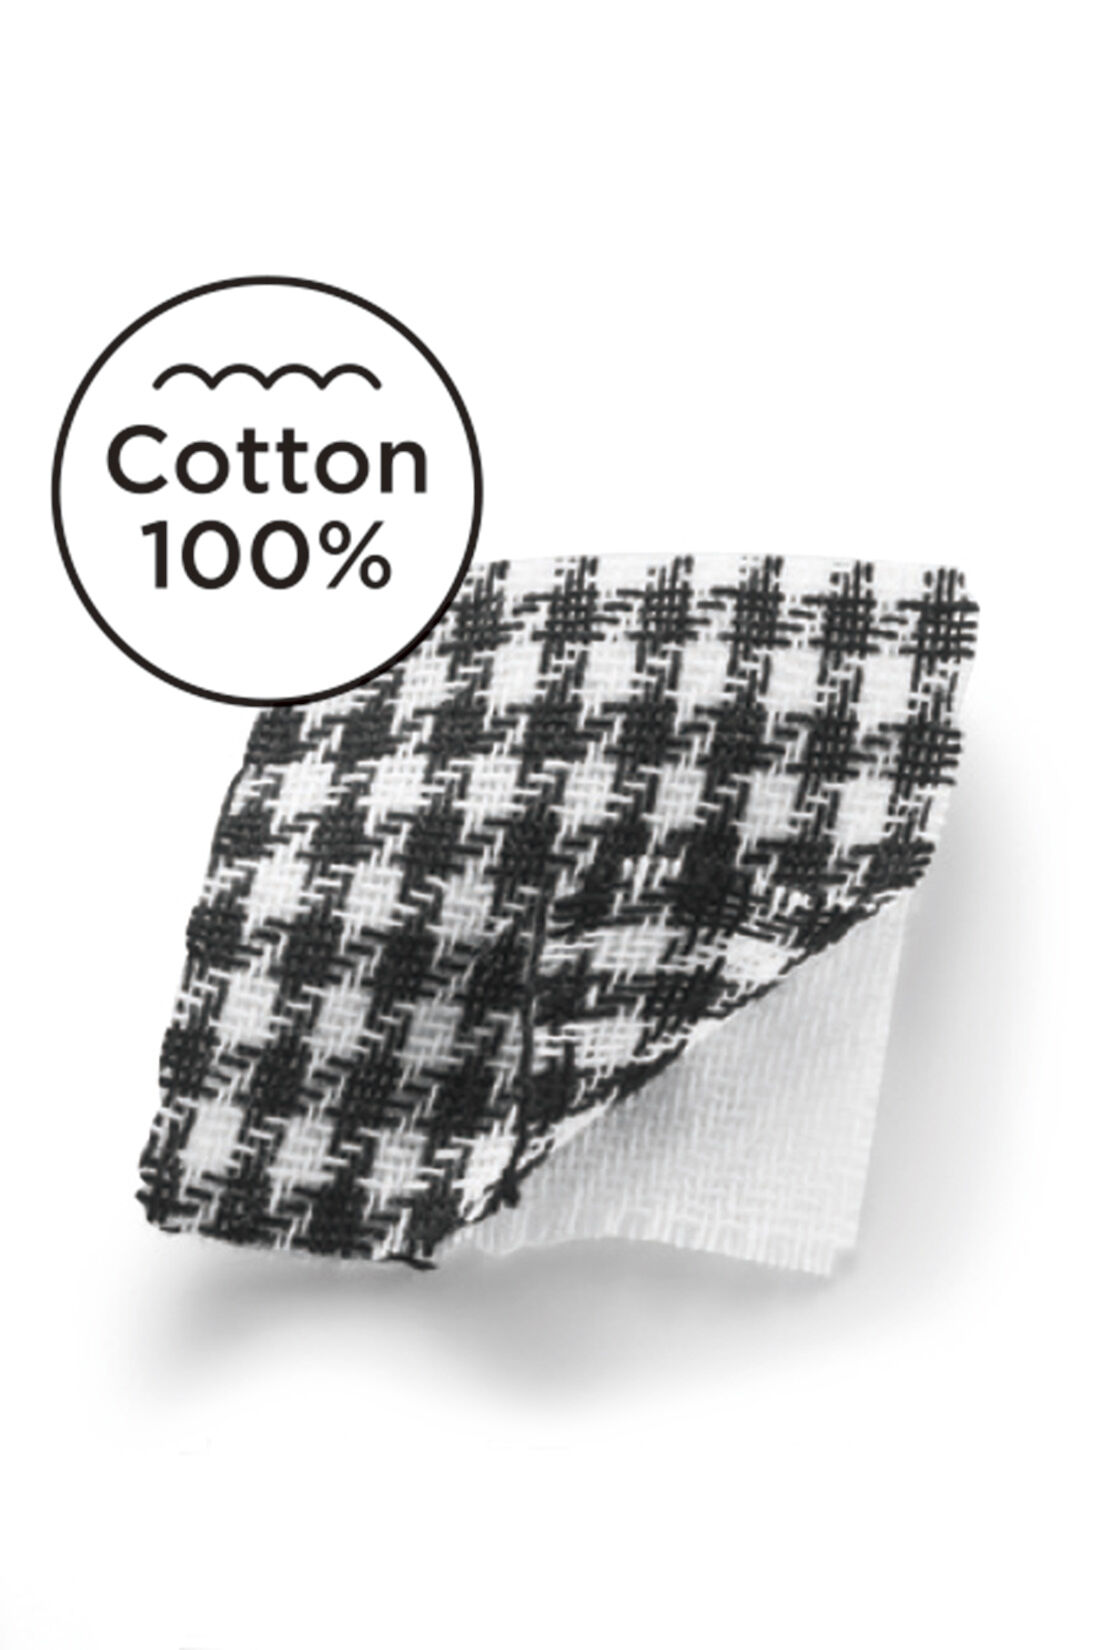 Live in  comfort|Live love cottonプロジェクト　リブ イン コンフォート　シンプルライフ研究家 マキさんとつくった ダブルガーゼのオーガニックコットンワンピース〈チドリ〉|オーガニックコットン100％のダブルガーゼ素材。無地ライクな先染め千鳥格子柄です。